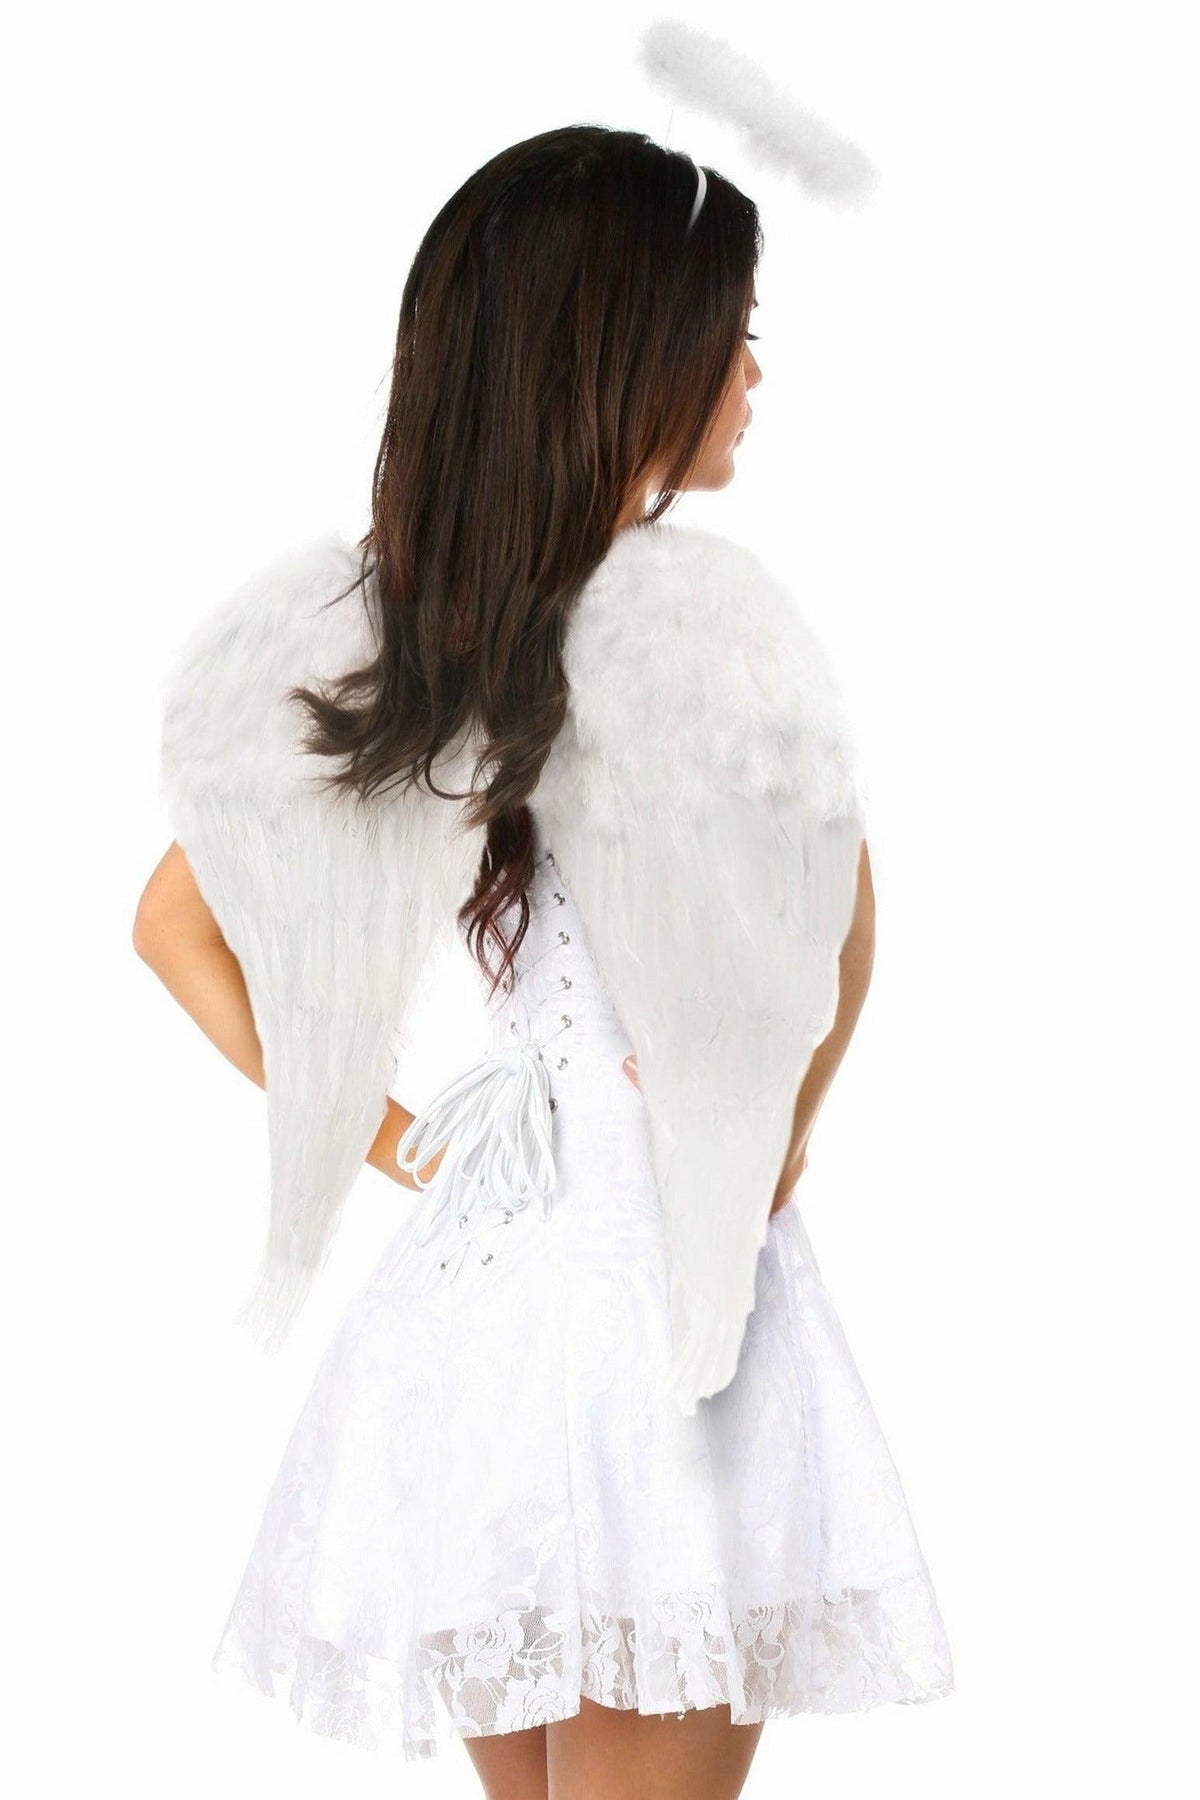 Lavish 3 PC Innocent Angel Corset Costume-Daisy Corsets